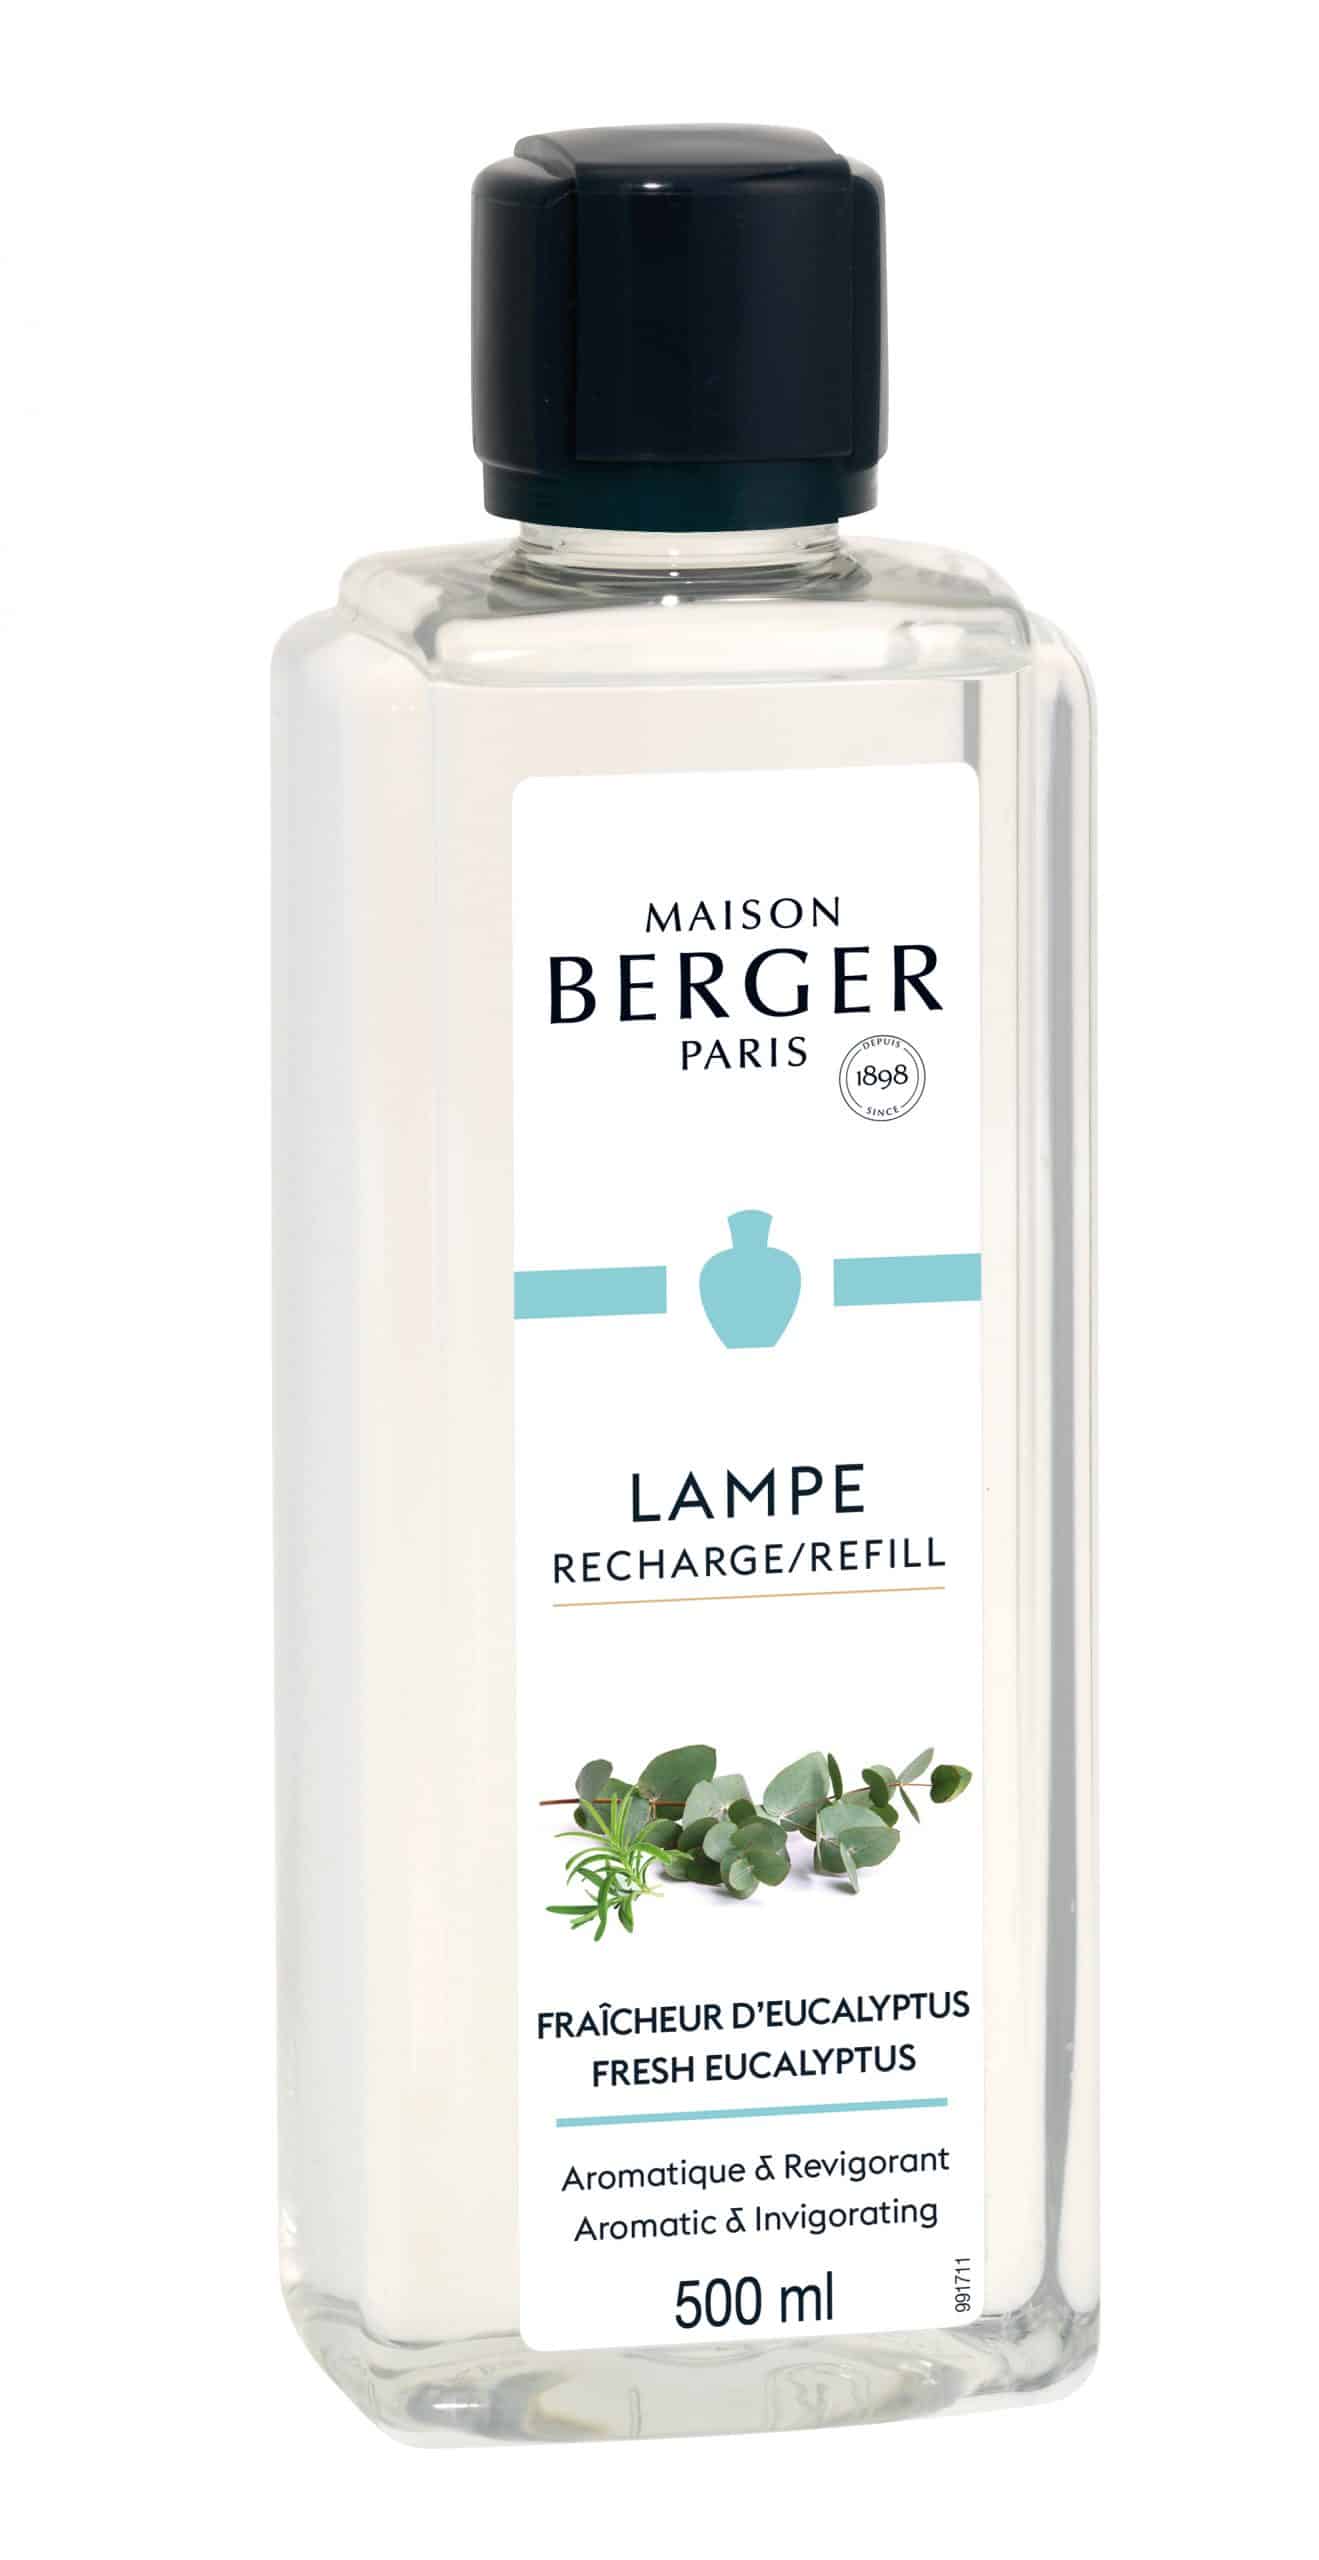 Maison Berger Paris - parfum Fresh Eucalyptus - 500 ml